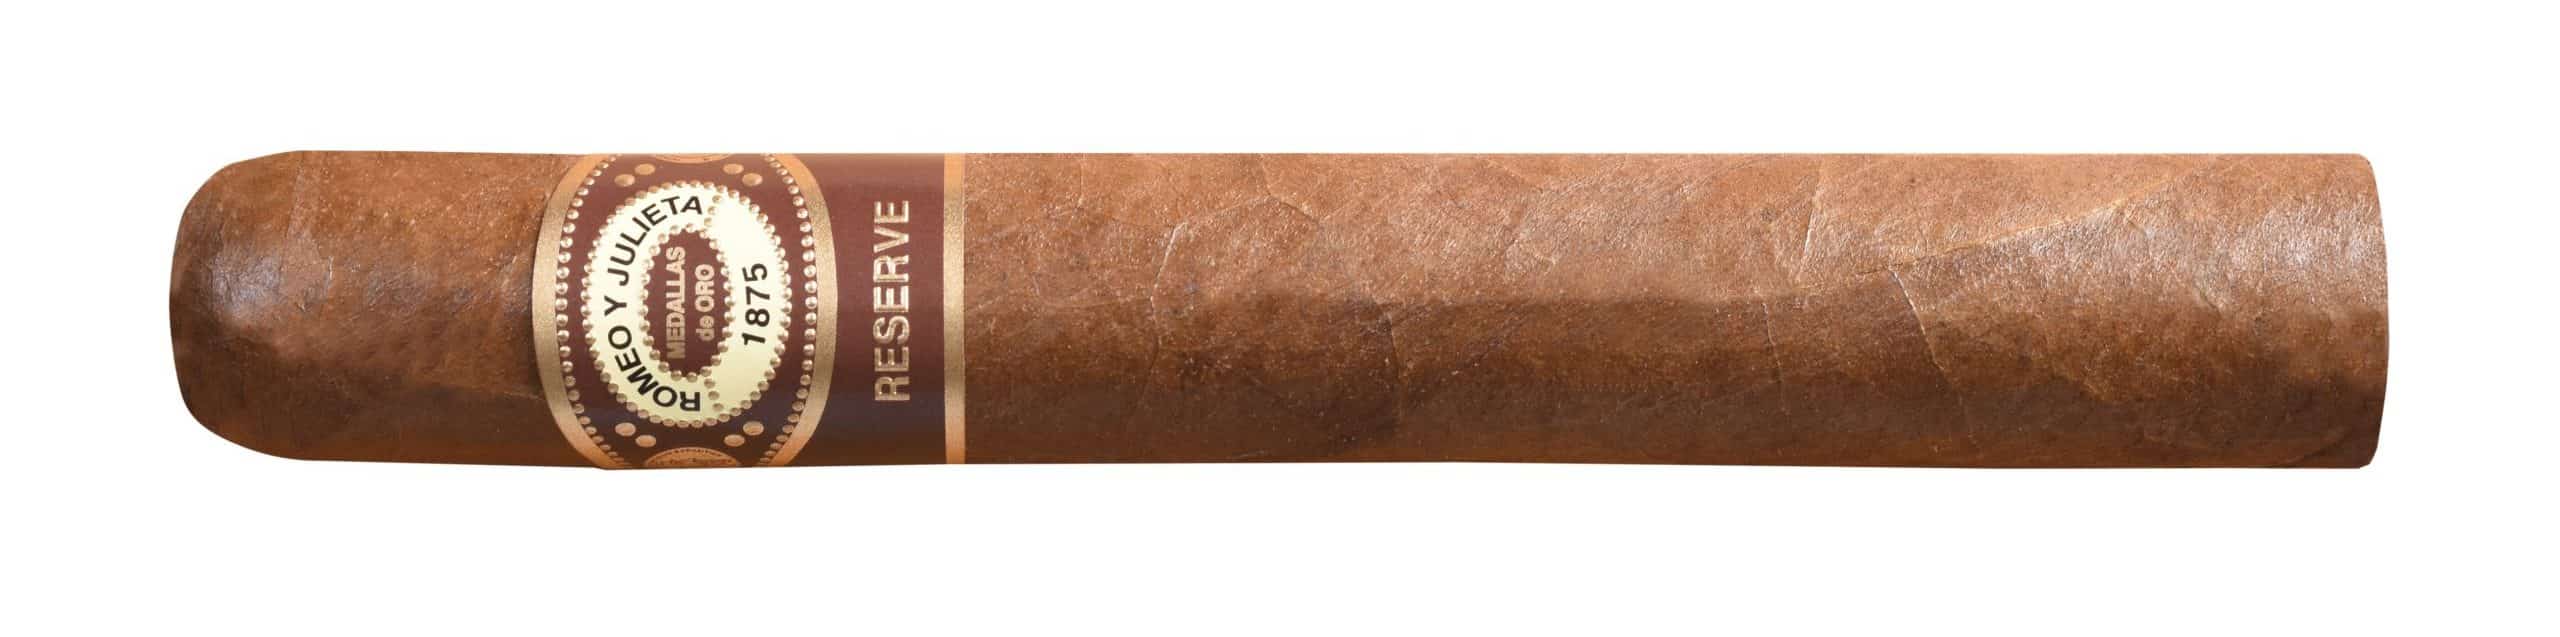 romeo y julieta reserve churchill single cigar